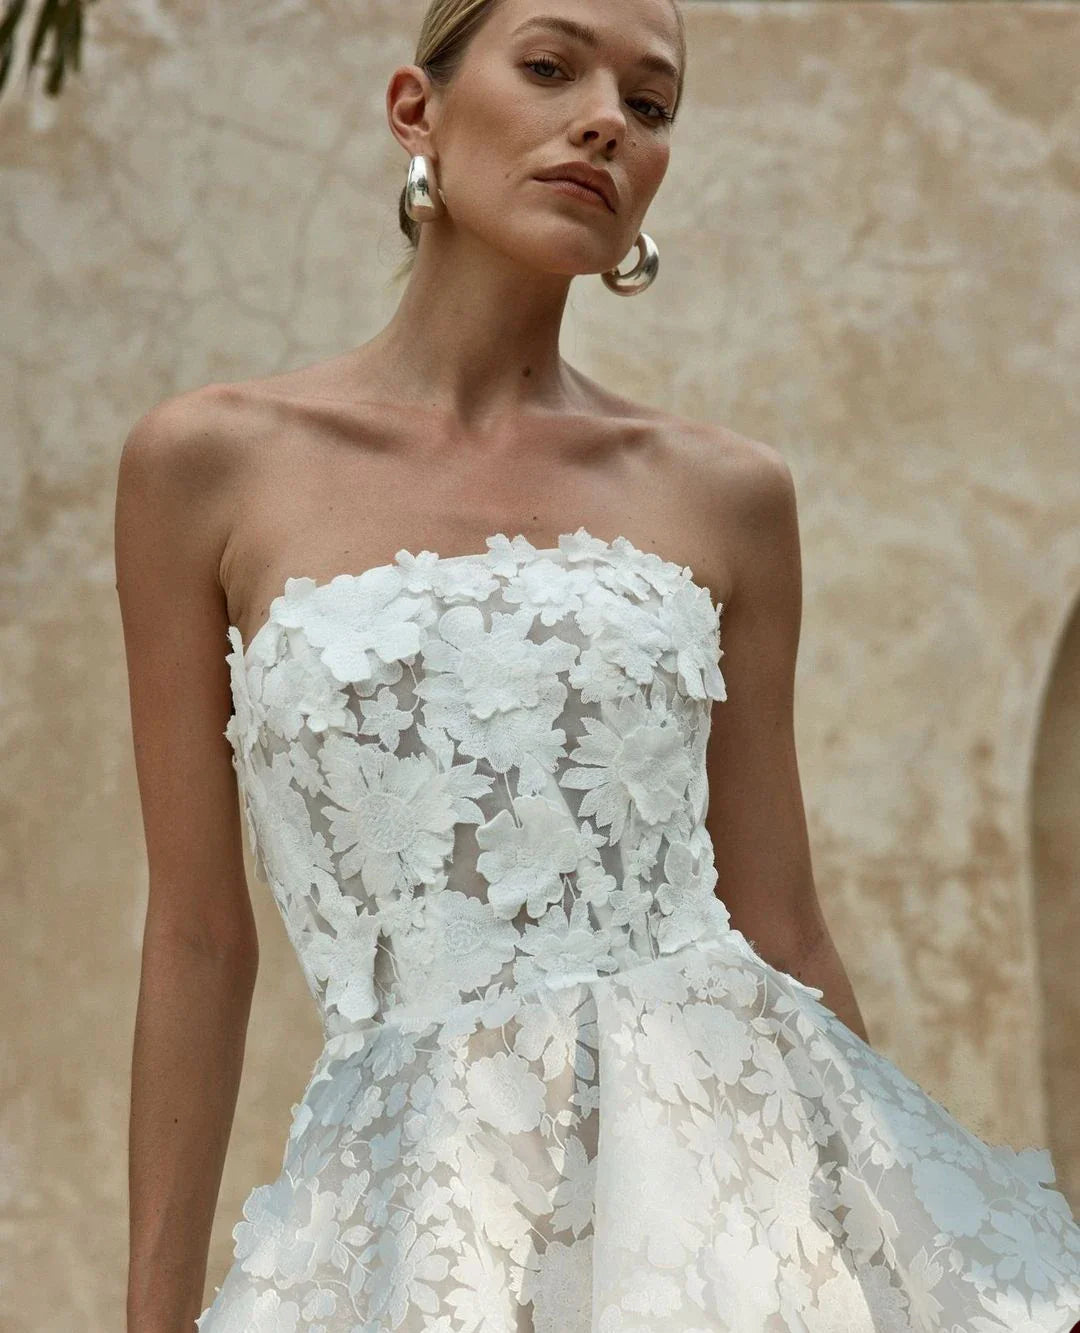 Beach Sleeveless Mini Length Short Wedding Party Dress Strapless Lace Appliques A Line Simple Bridal Gown Robe De Mariee